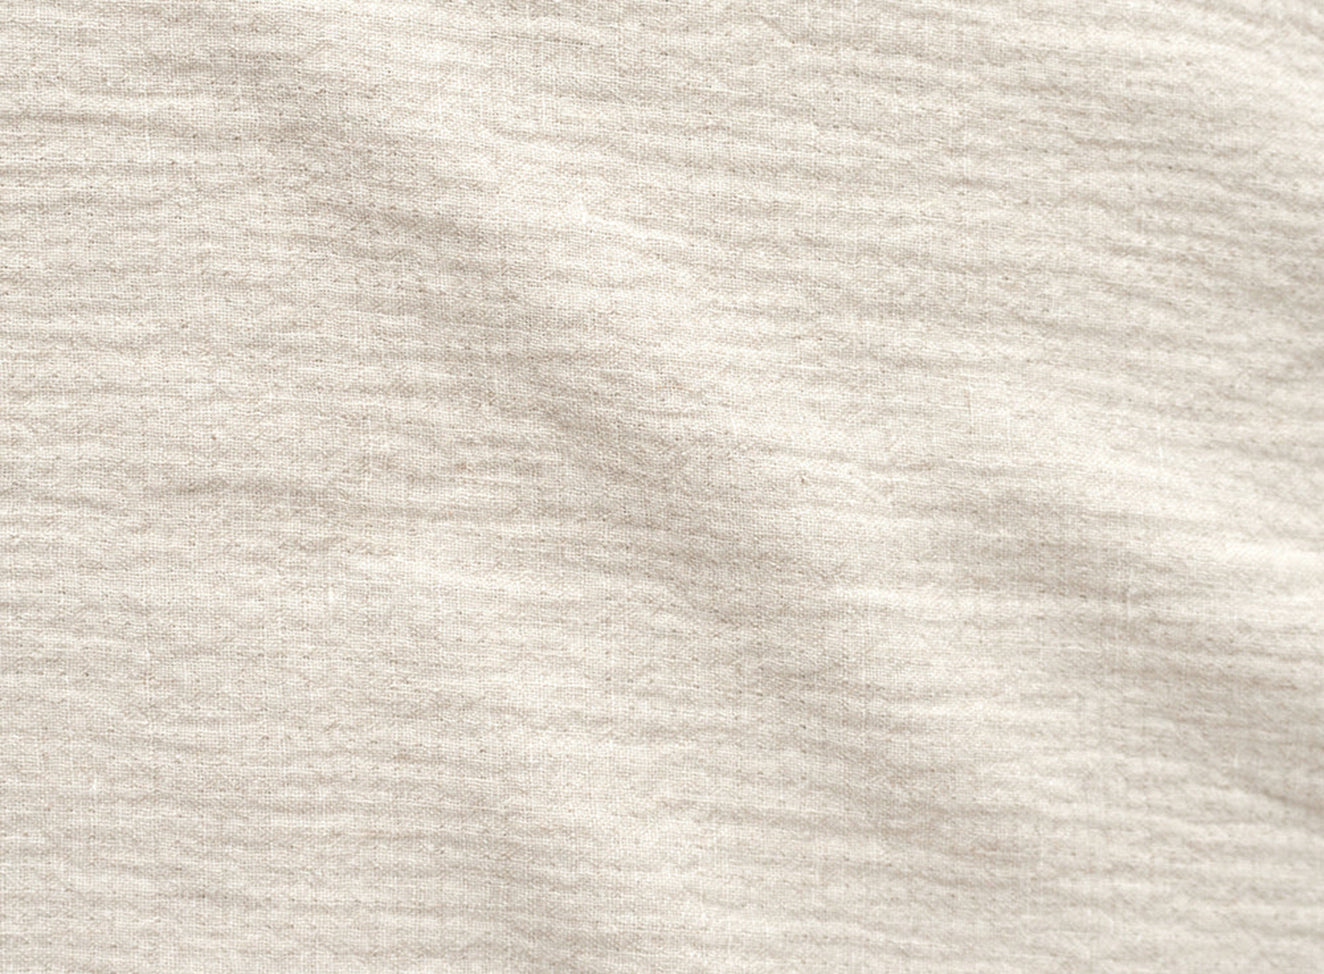 Swatch in Corn Silk, a light beige Washed Cotton Linen